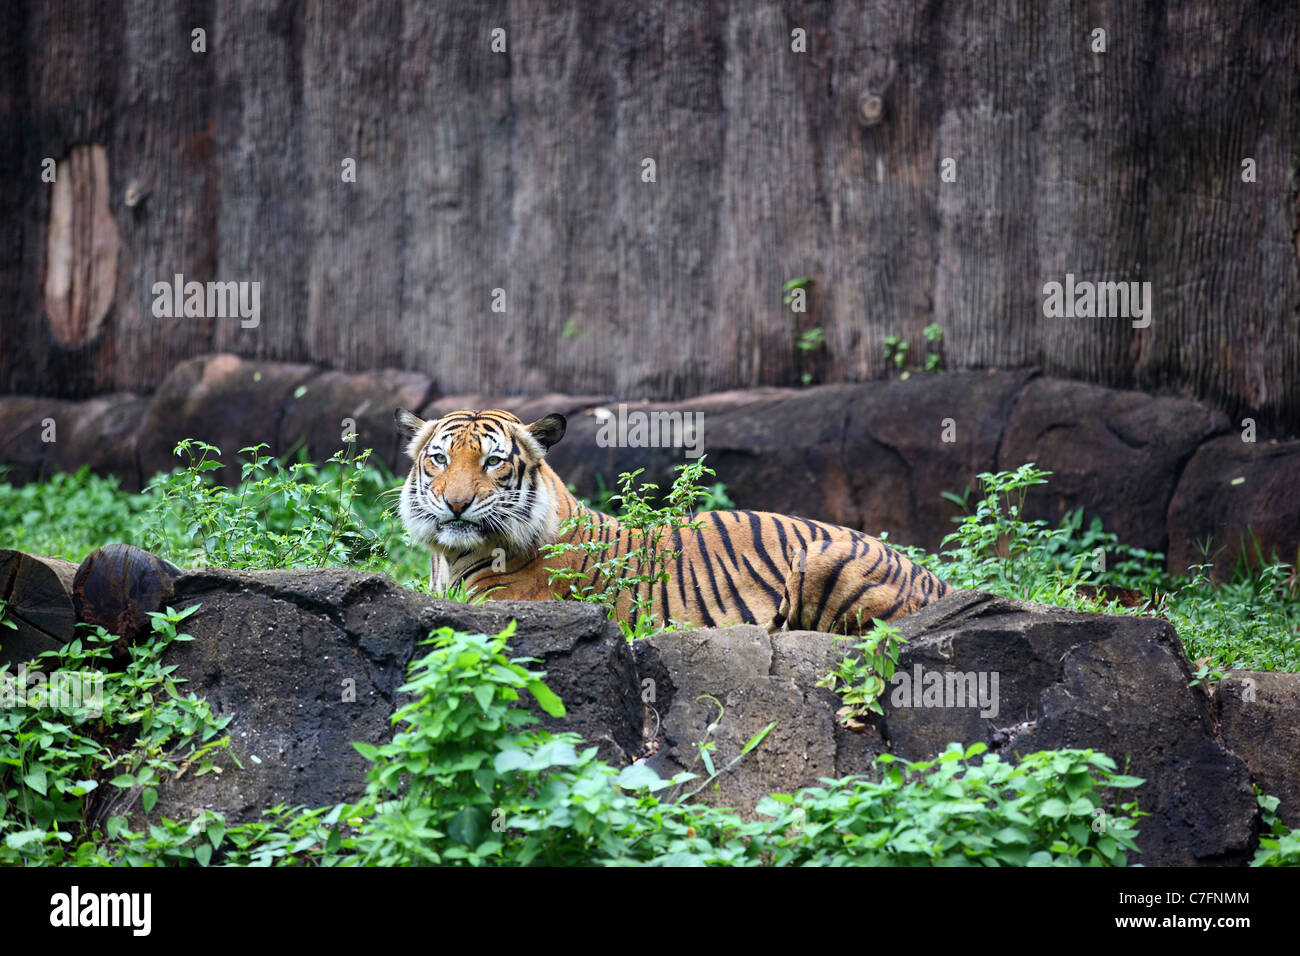 Malaysian tiger making eye contact with camera at Melaka zoo Stock Photo -  Alamy